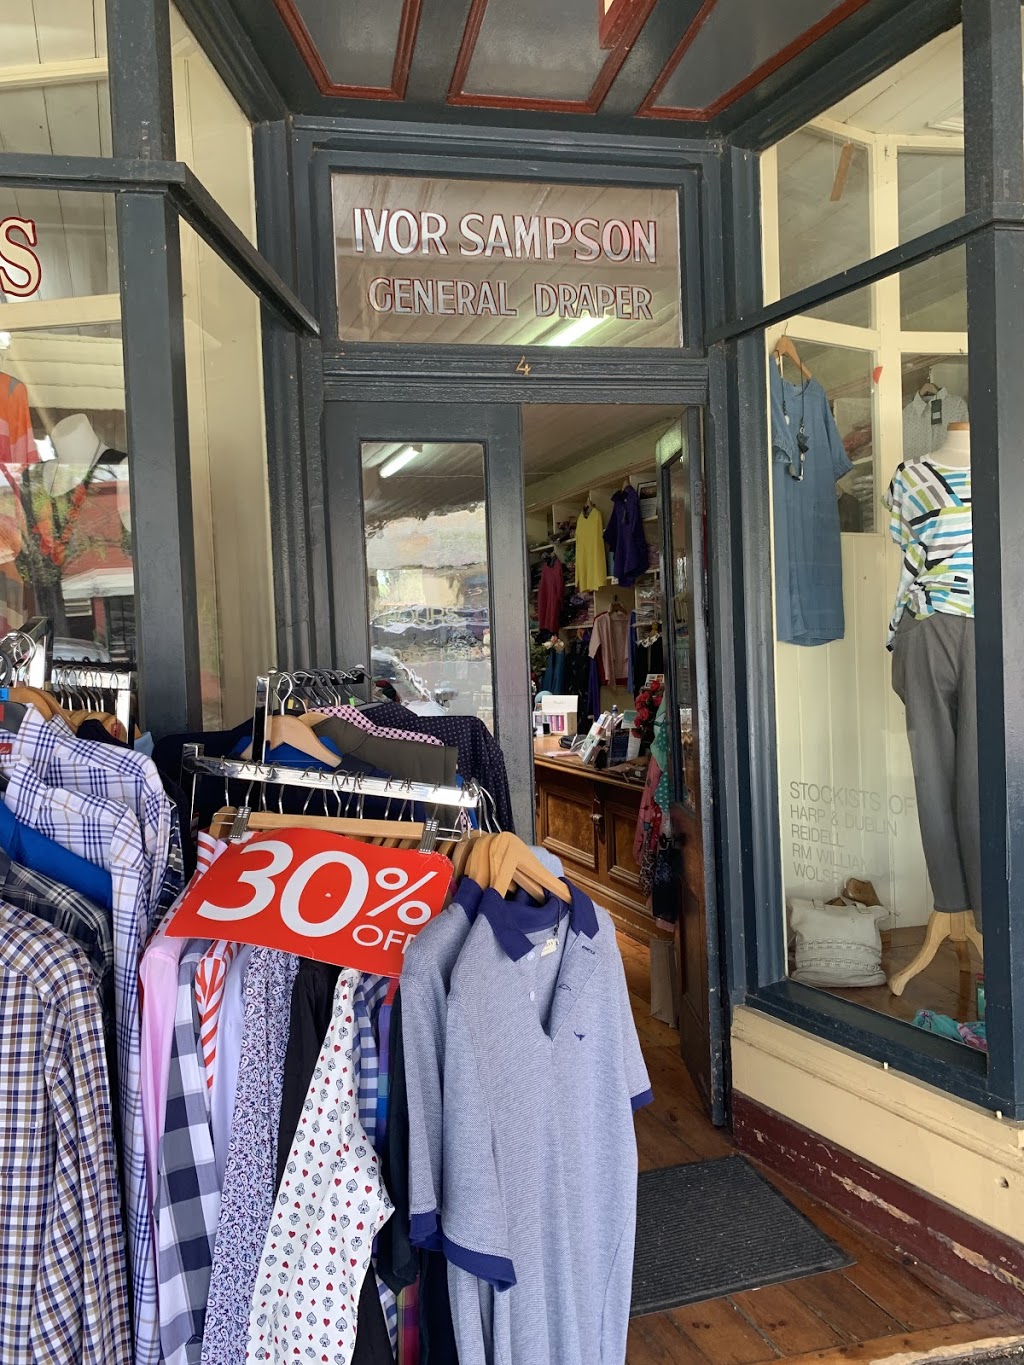 Beatons Stores | 4 Main St, Maldon VIC 3463, Australia